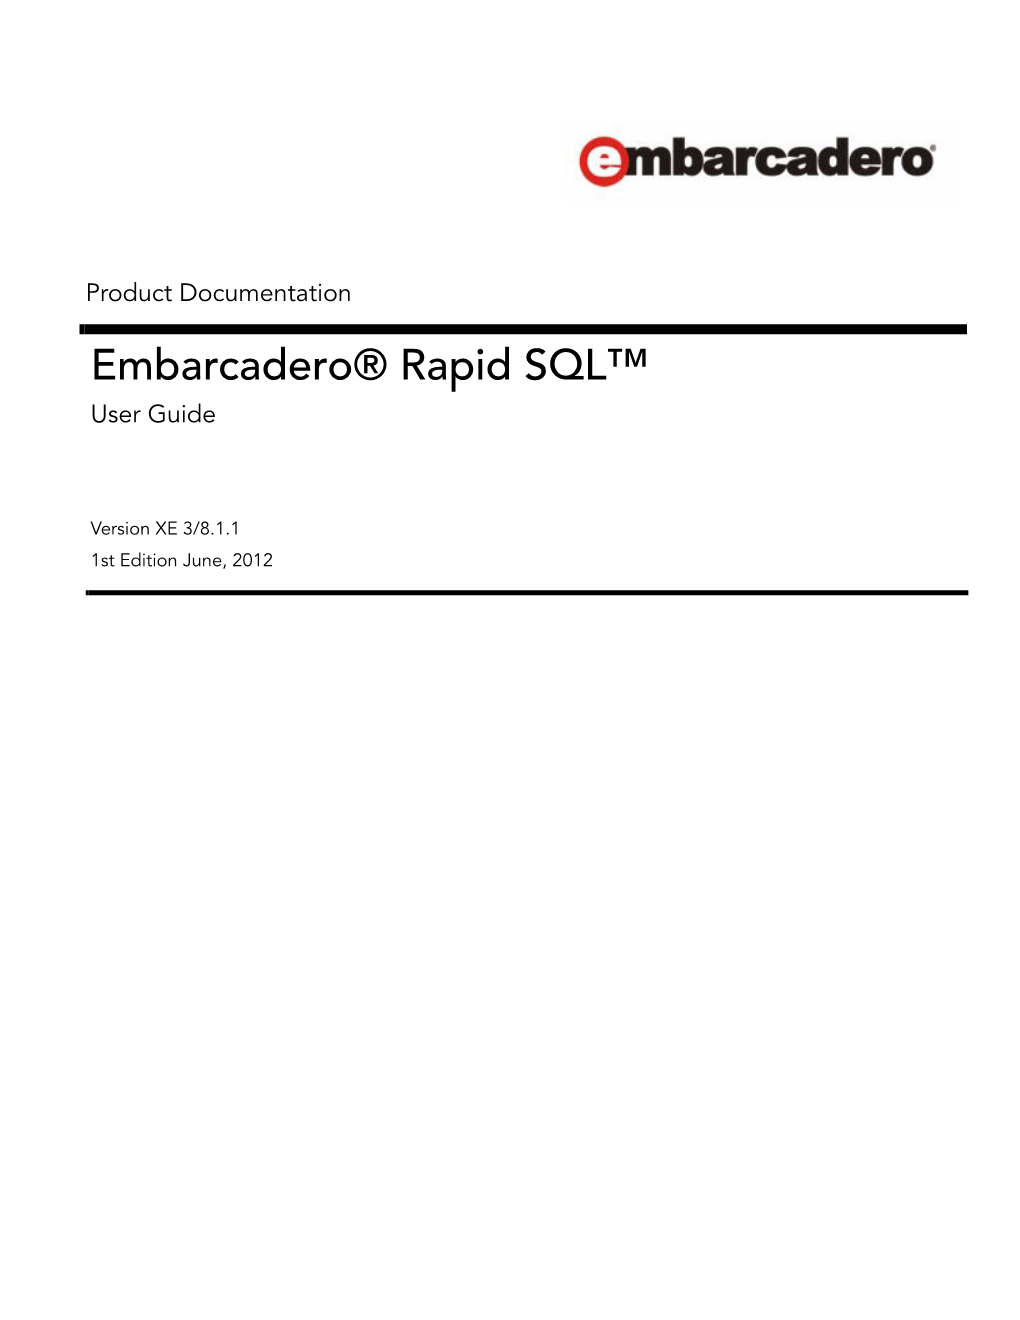 Embarcadero® Rapid SQL™ User Guide